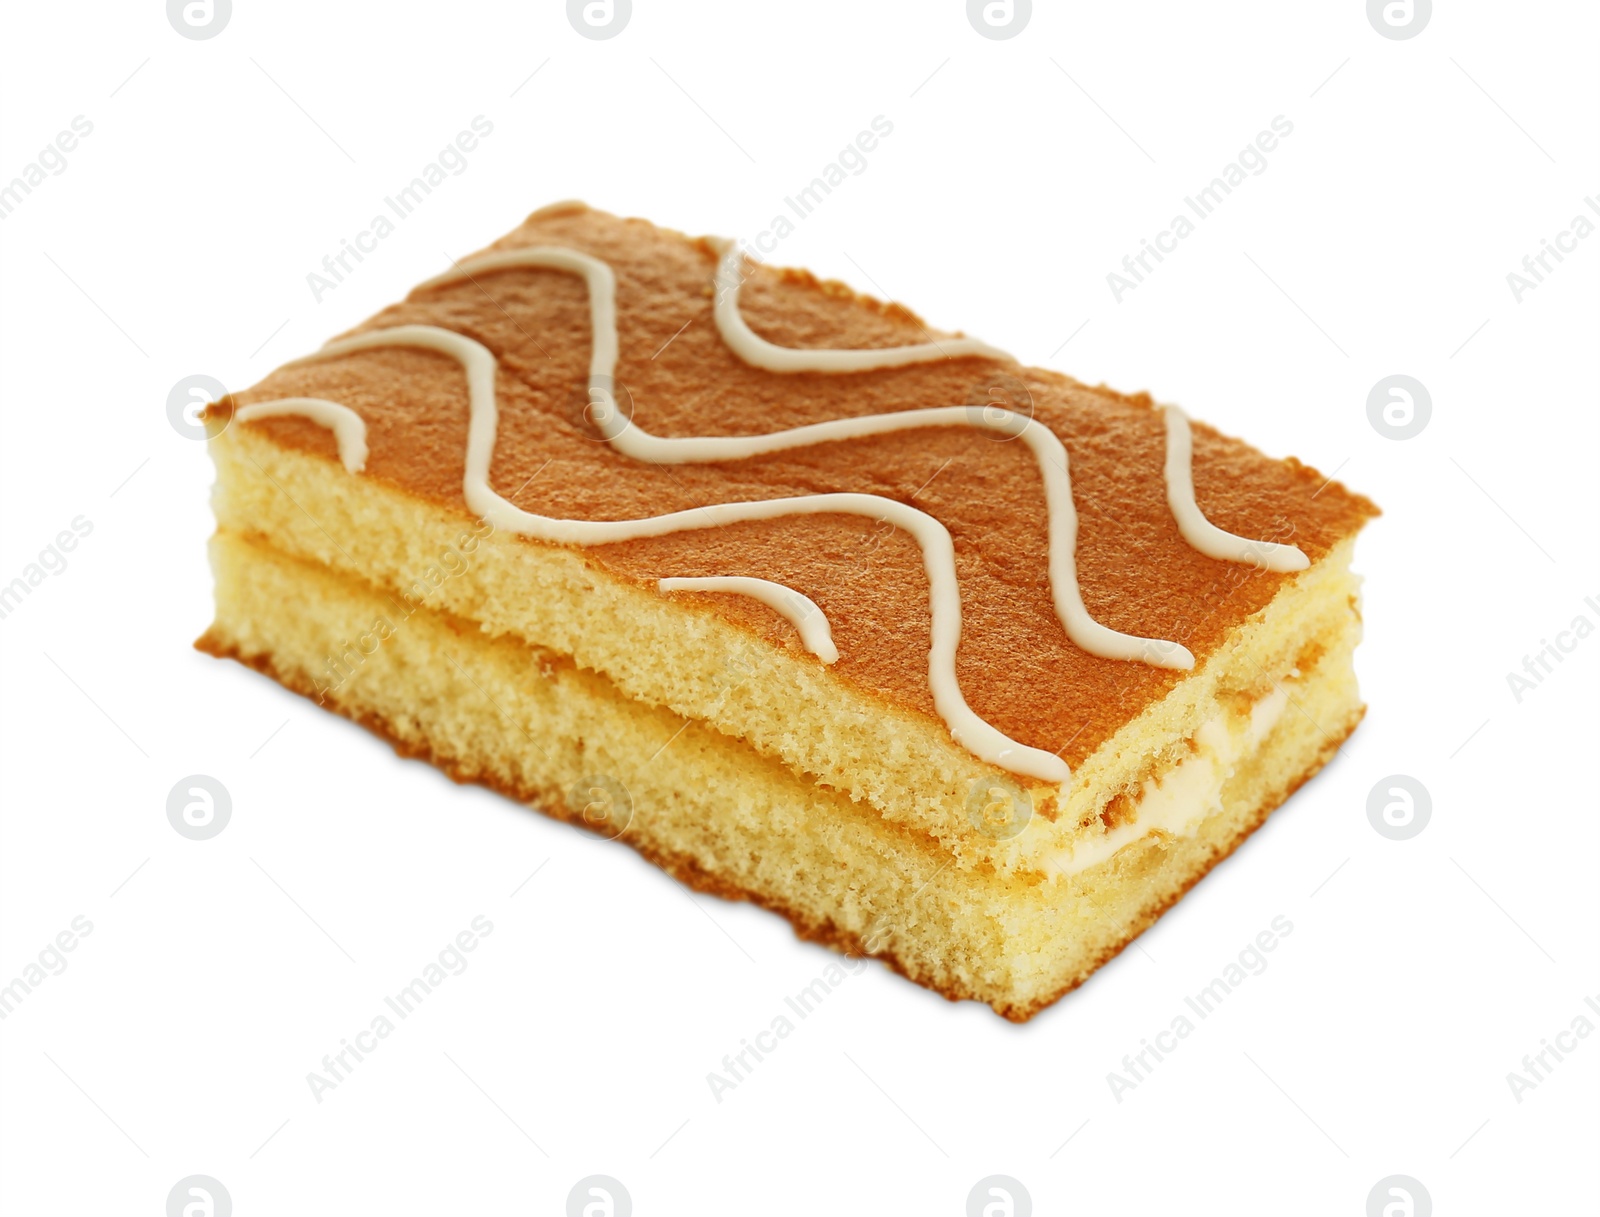 Photo of Delicious homemade sponge cake isolated on white